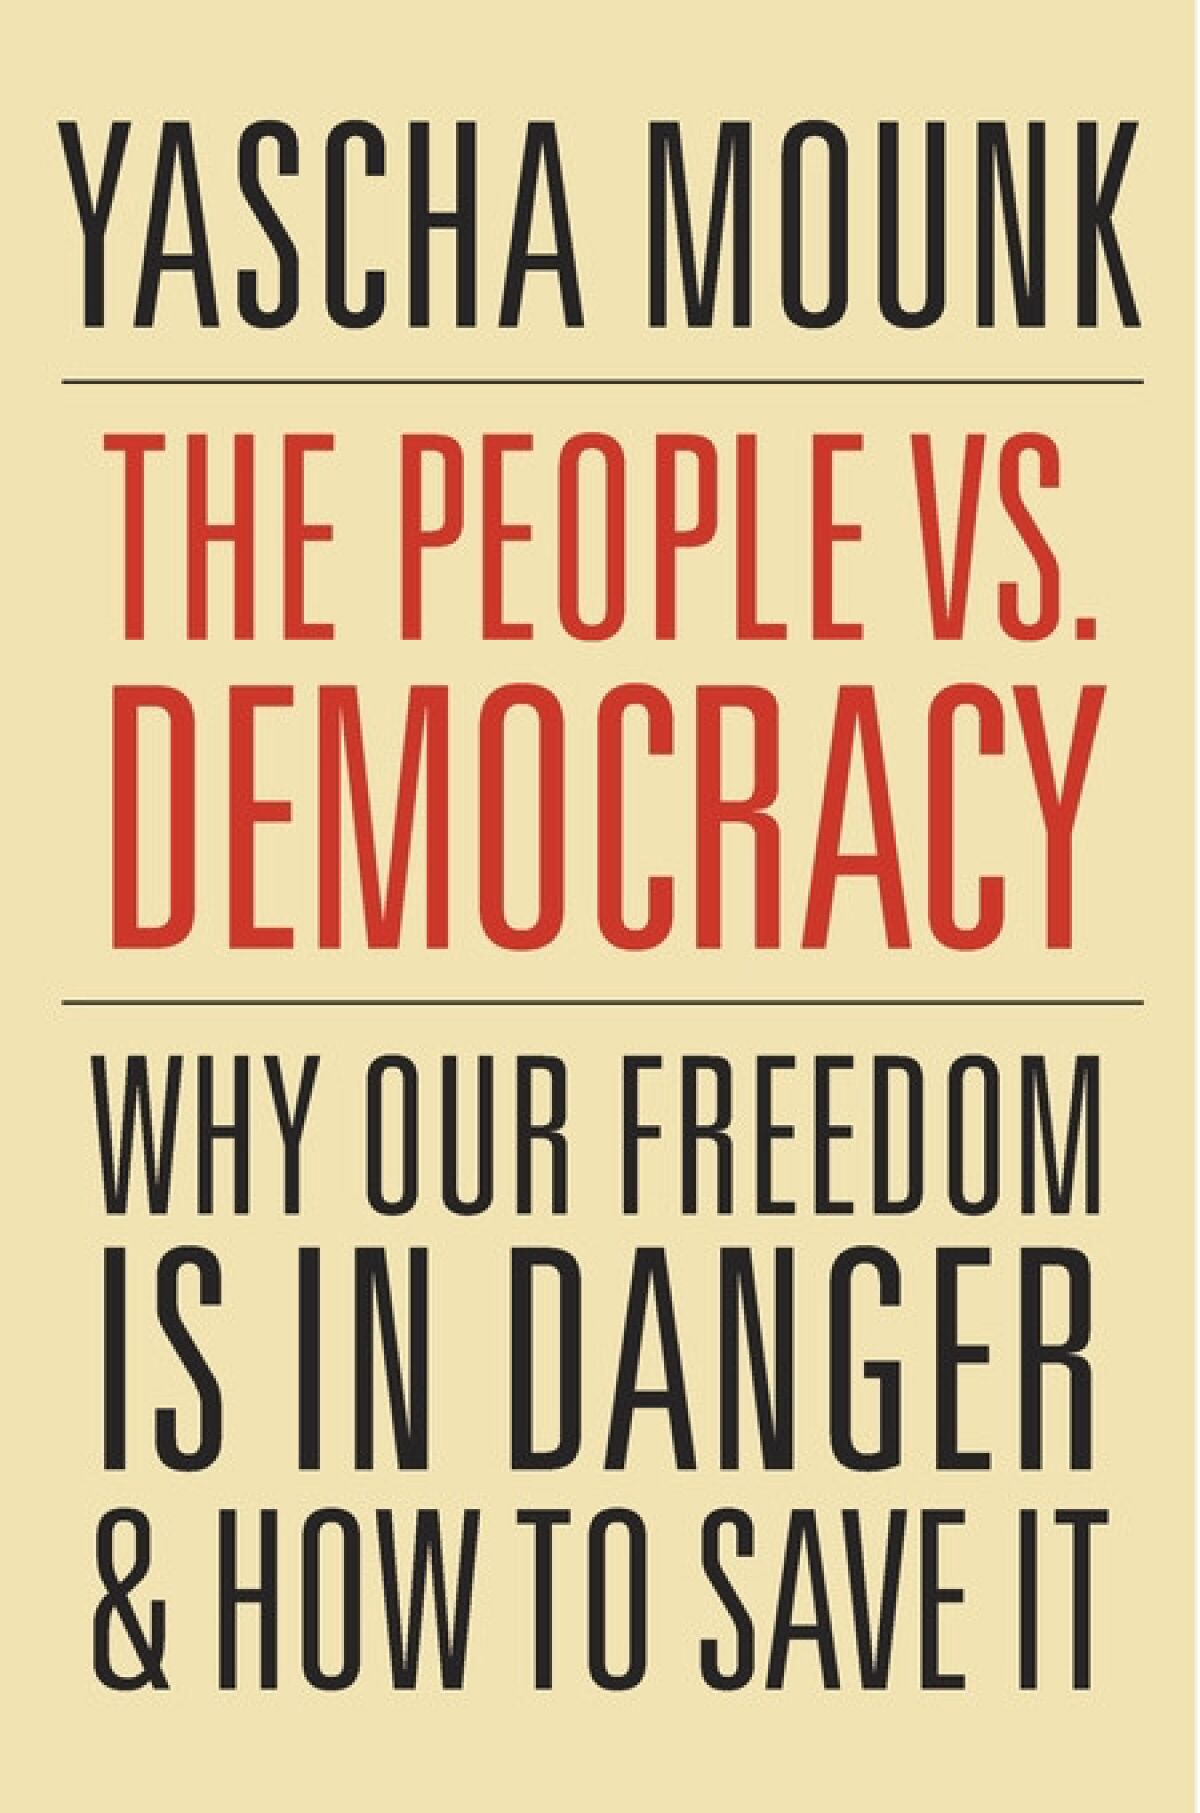 Book jacket for Yascha Mounk's 'The People vs. Democracy'. CREDIT: Harvard University Press